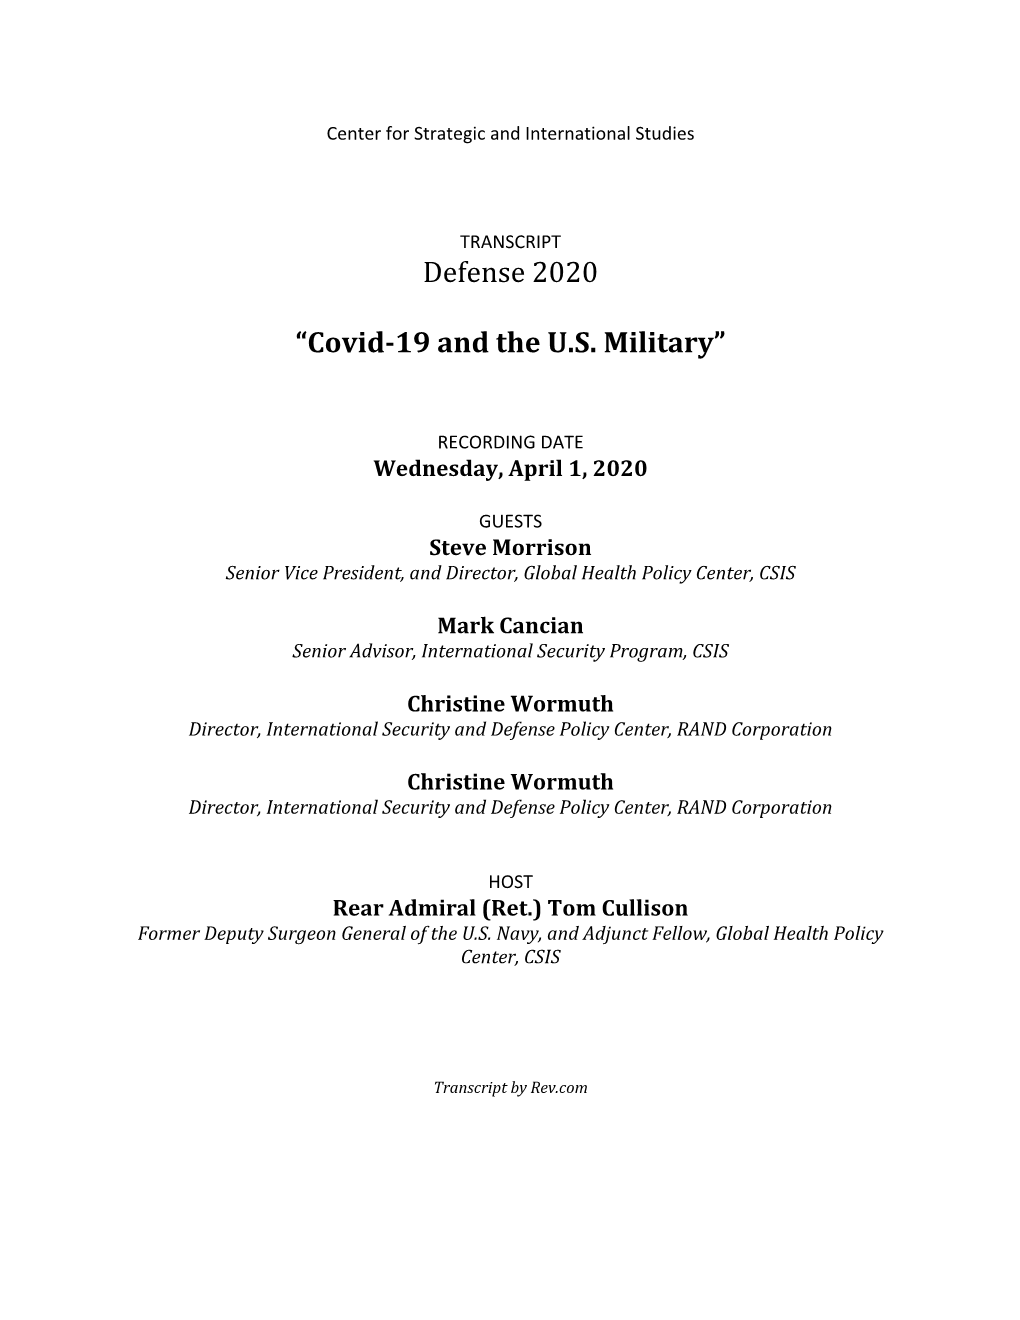 Defense 2020 “Covid-19 and the U.S. Military”